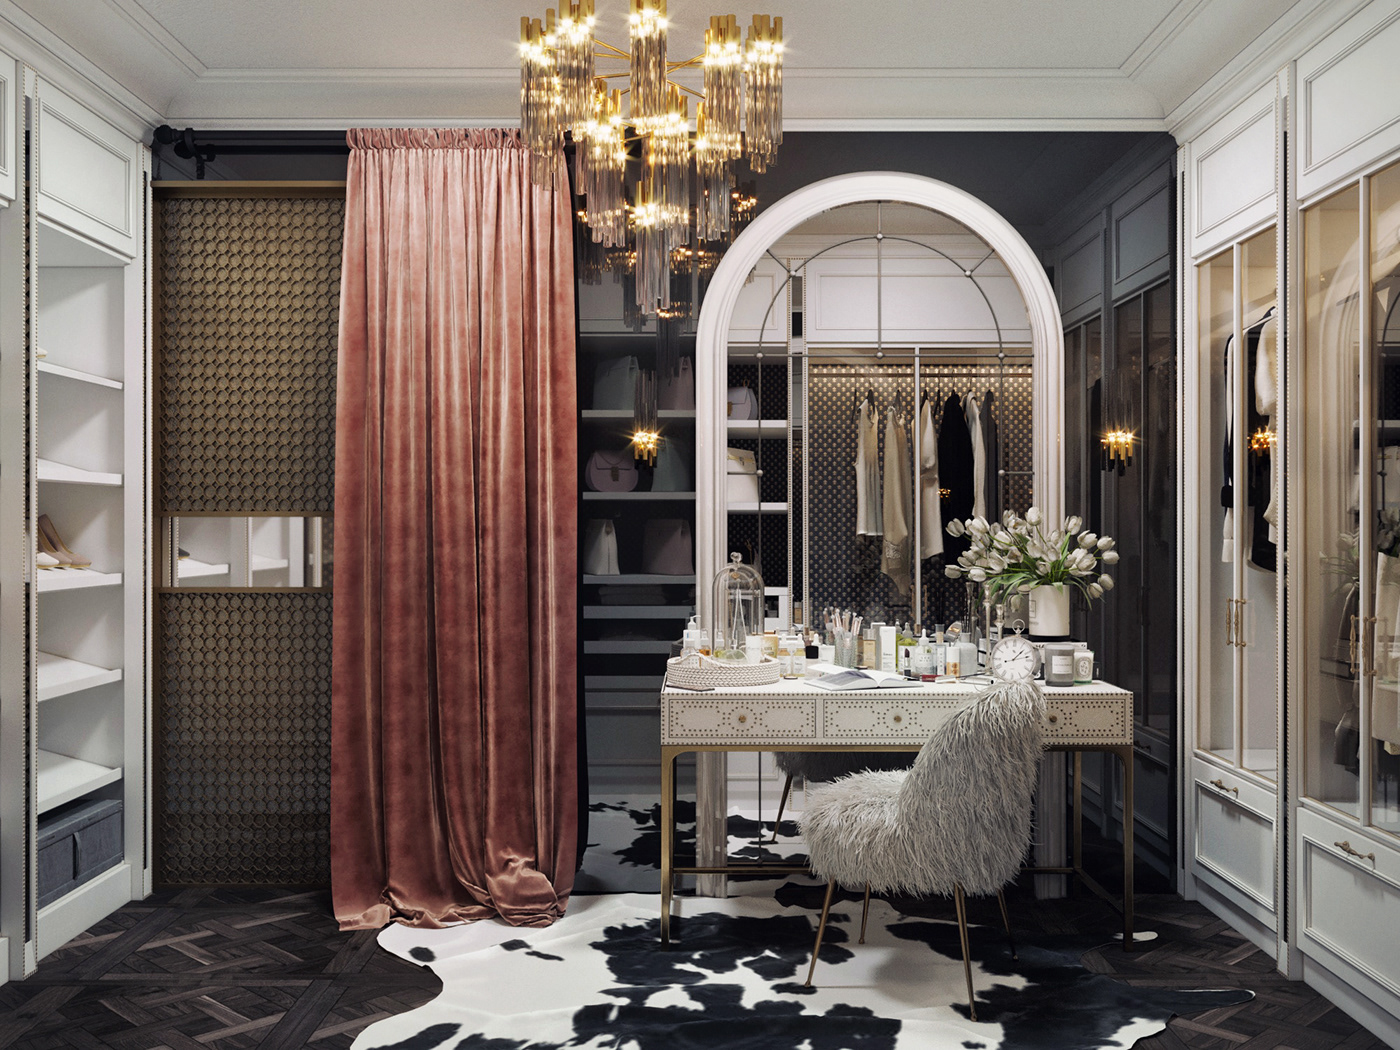 bedroom bedroomdesign elegantinterior elegant interiordesign wardrobe bathroom Interior Black&white residential